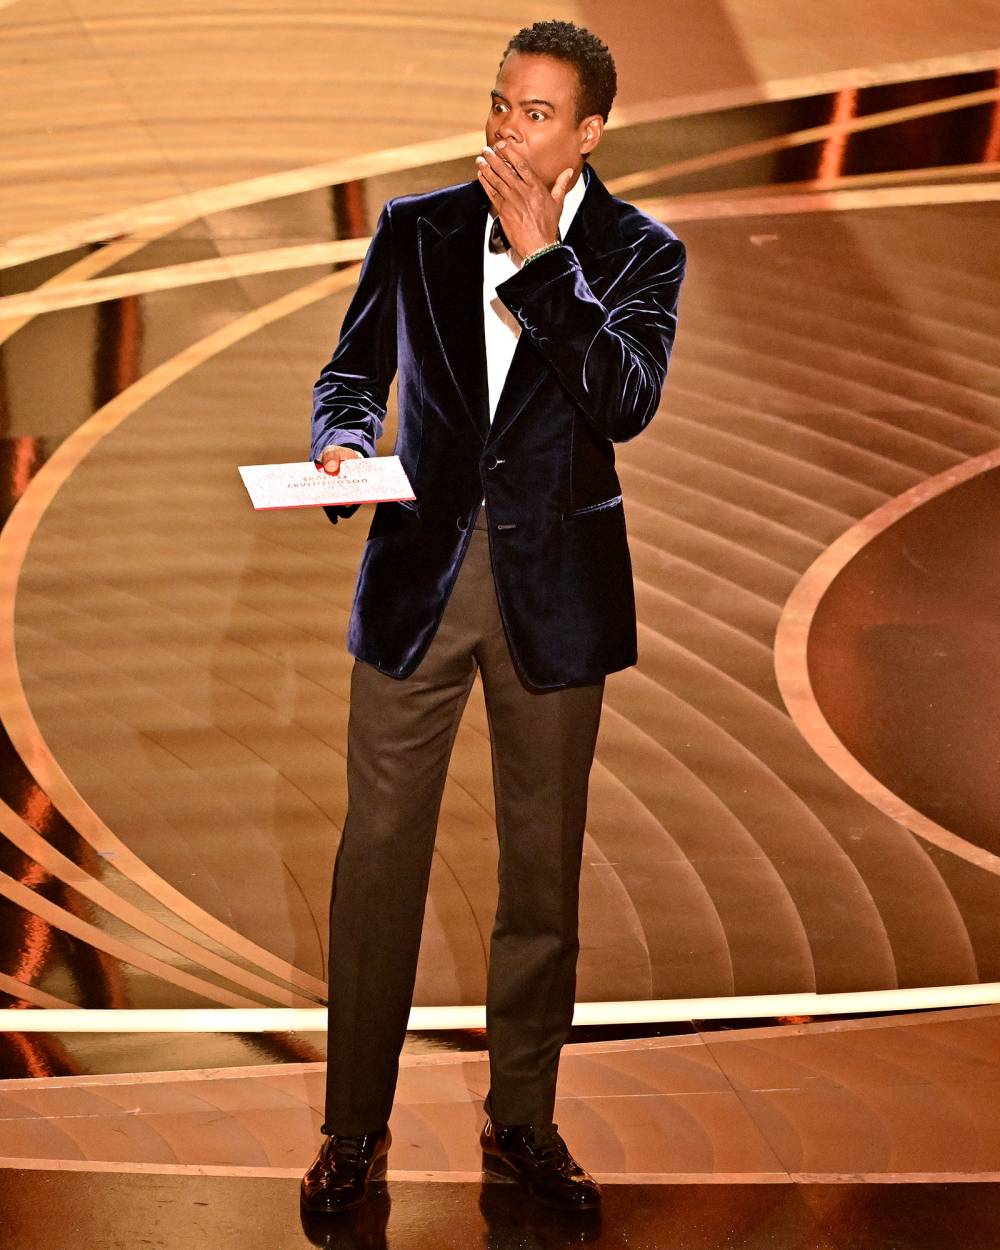 Chris Rock Won't File Police Report Will Smith Avoids Press Oscars Slap 2